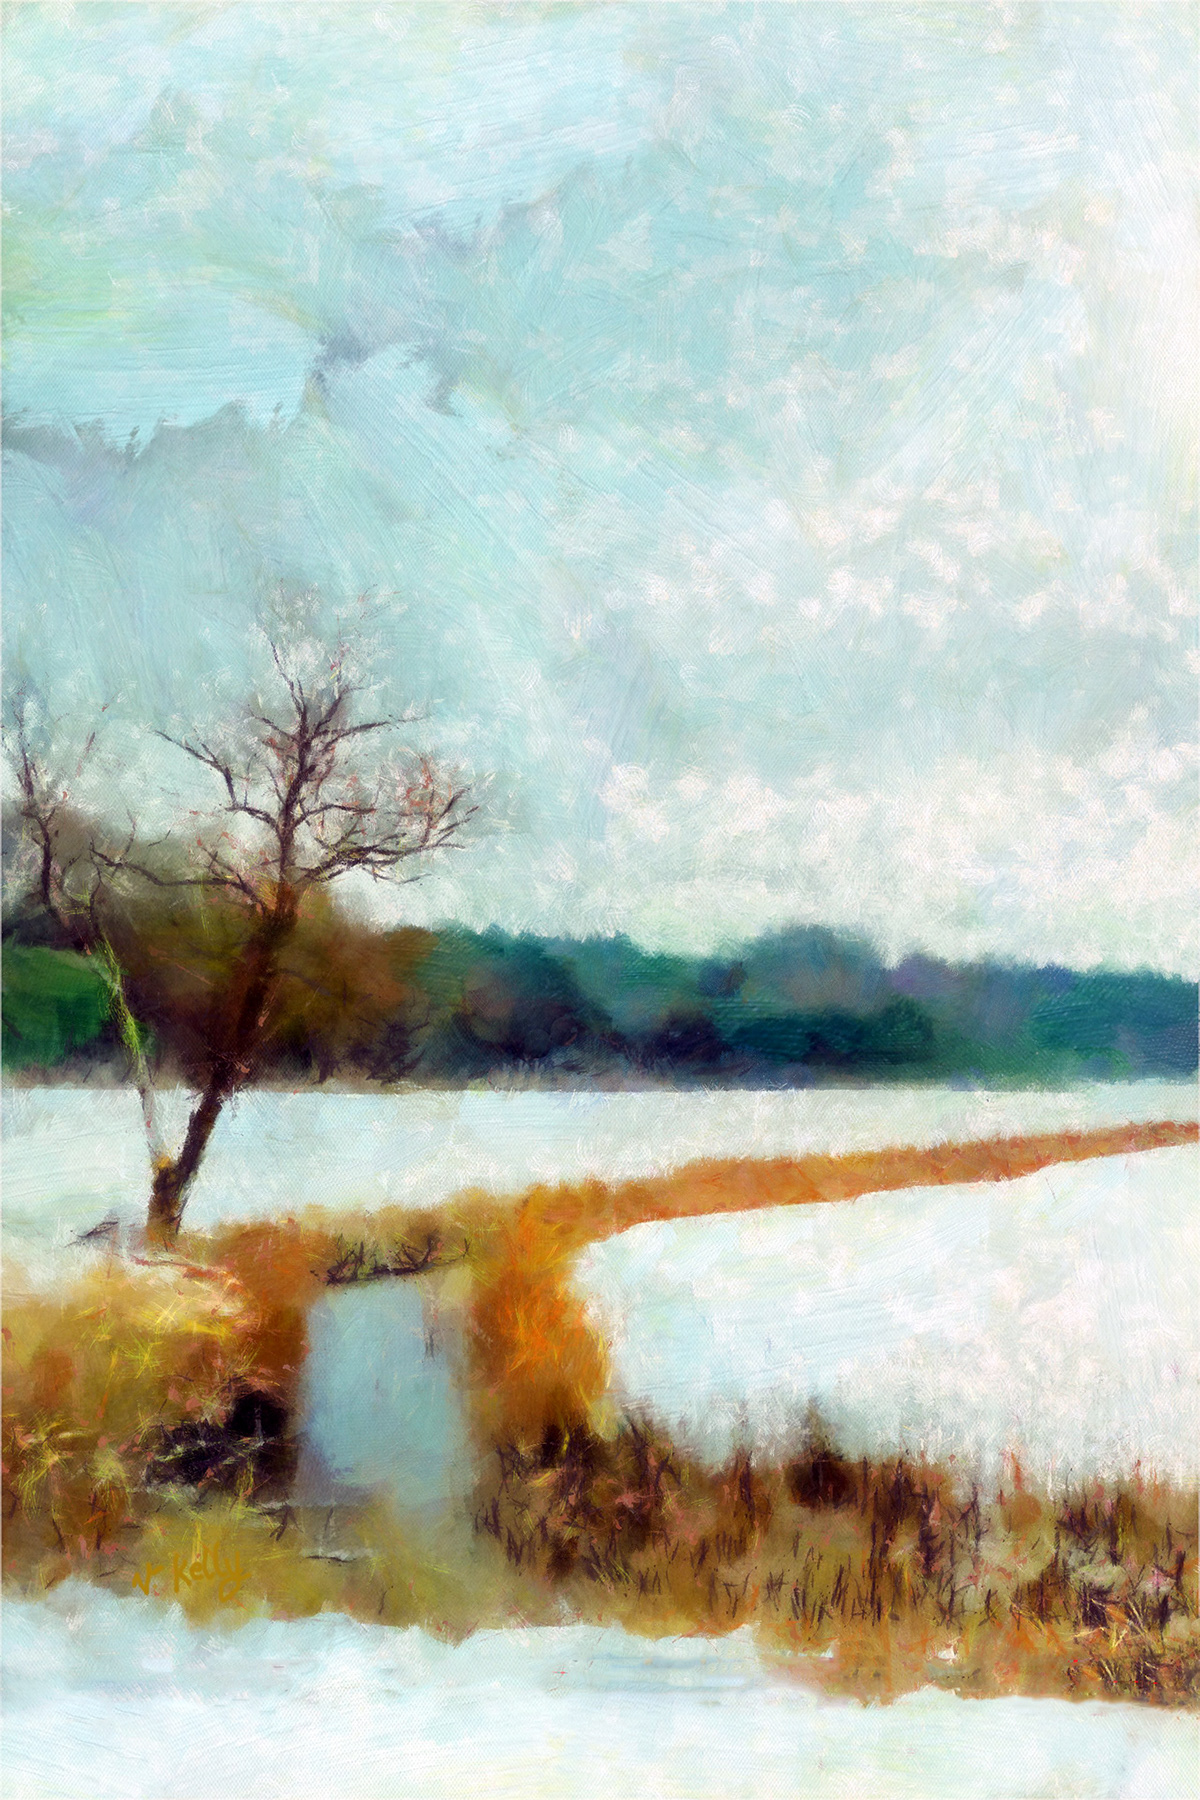 art Landscape tradigital valzart snow Paintings winter seasons countryside norfolk broads windmills